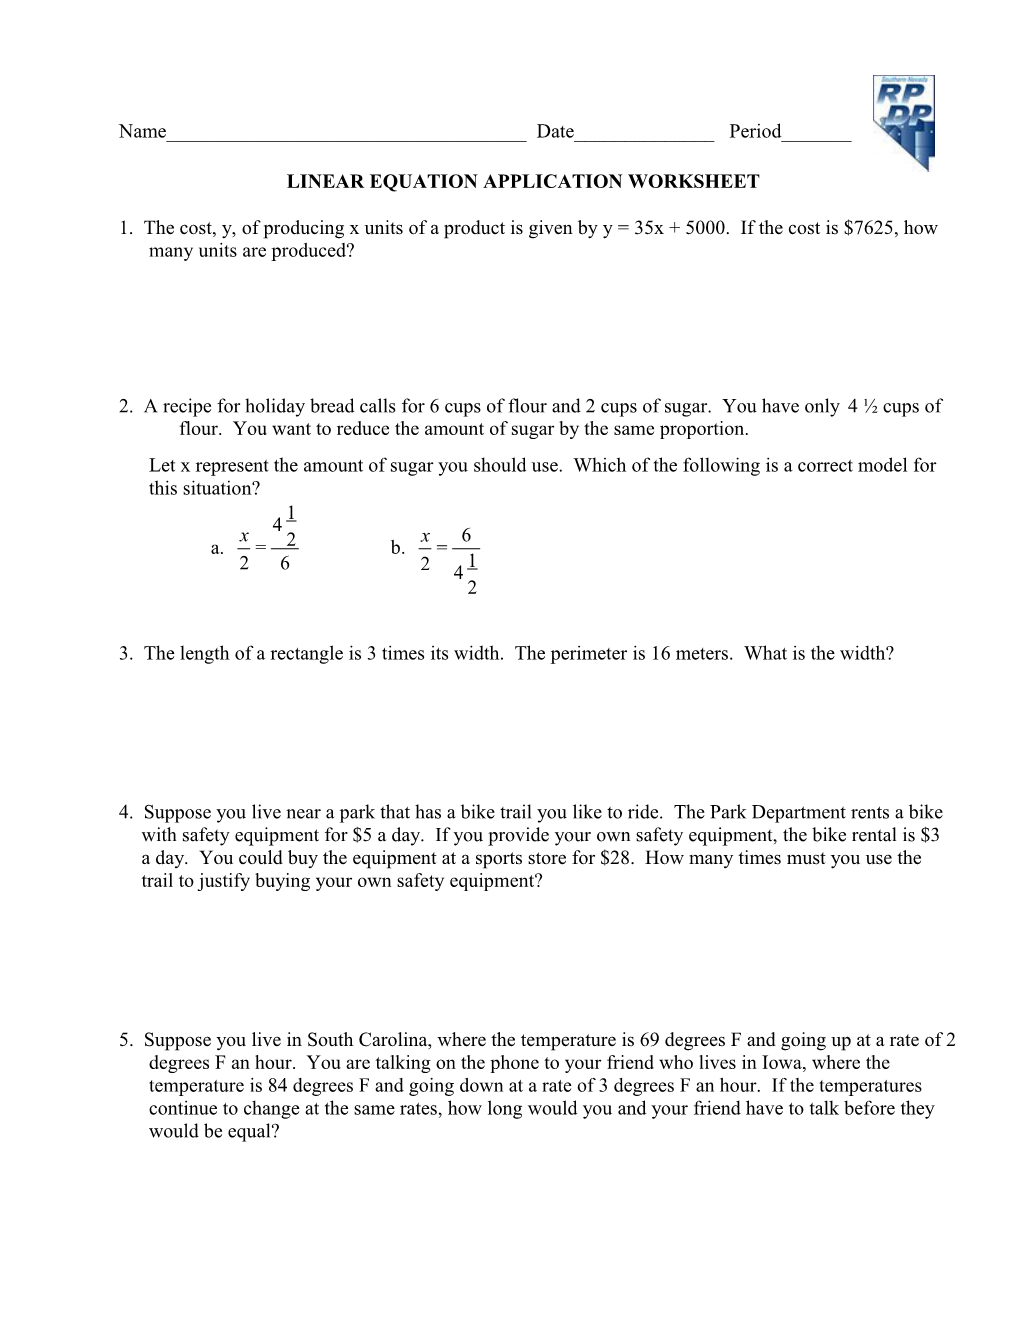 Linear Equation Application Worksheet